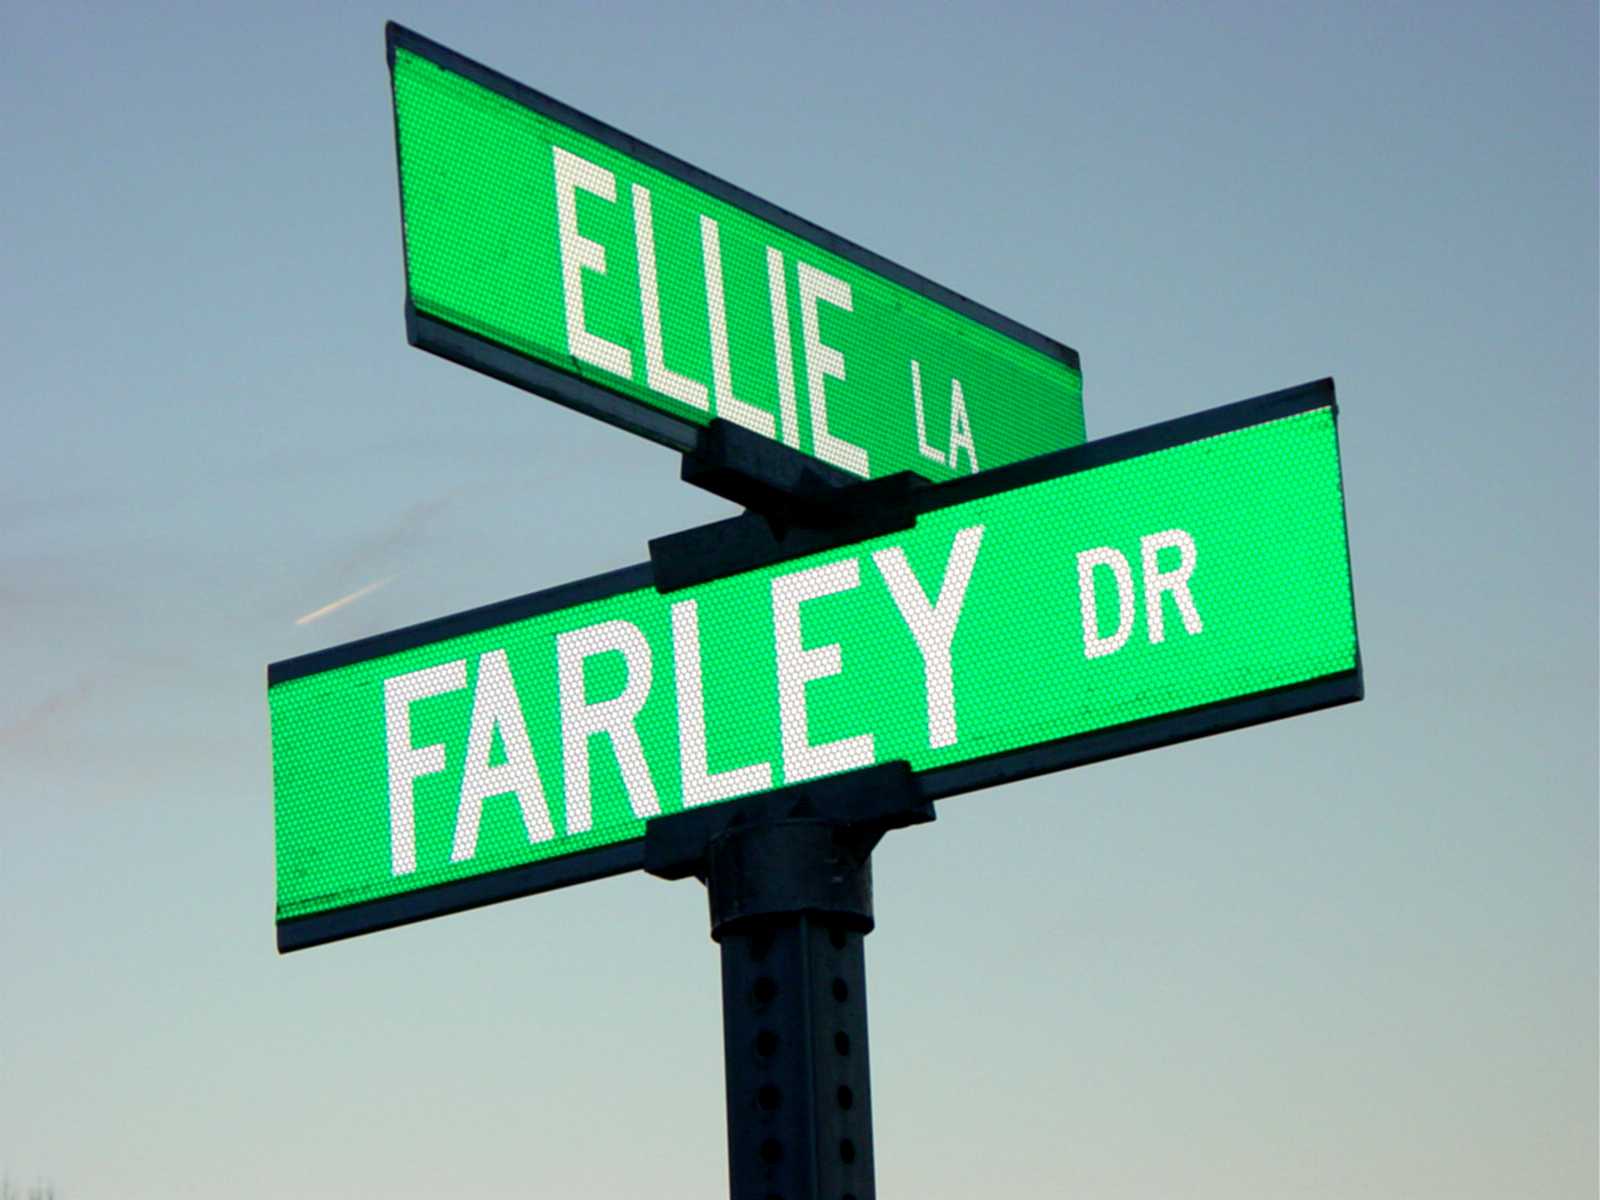 Ellie Lane and Farley Drive